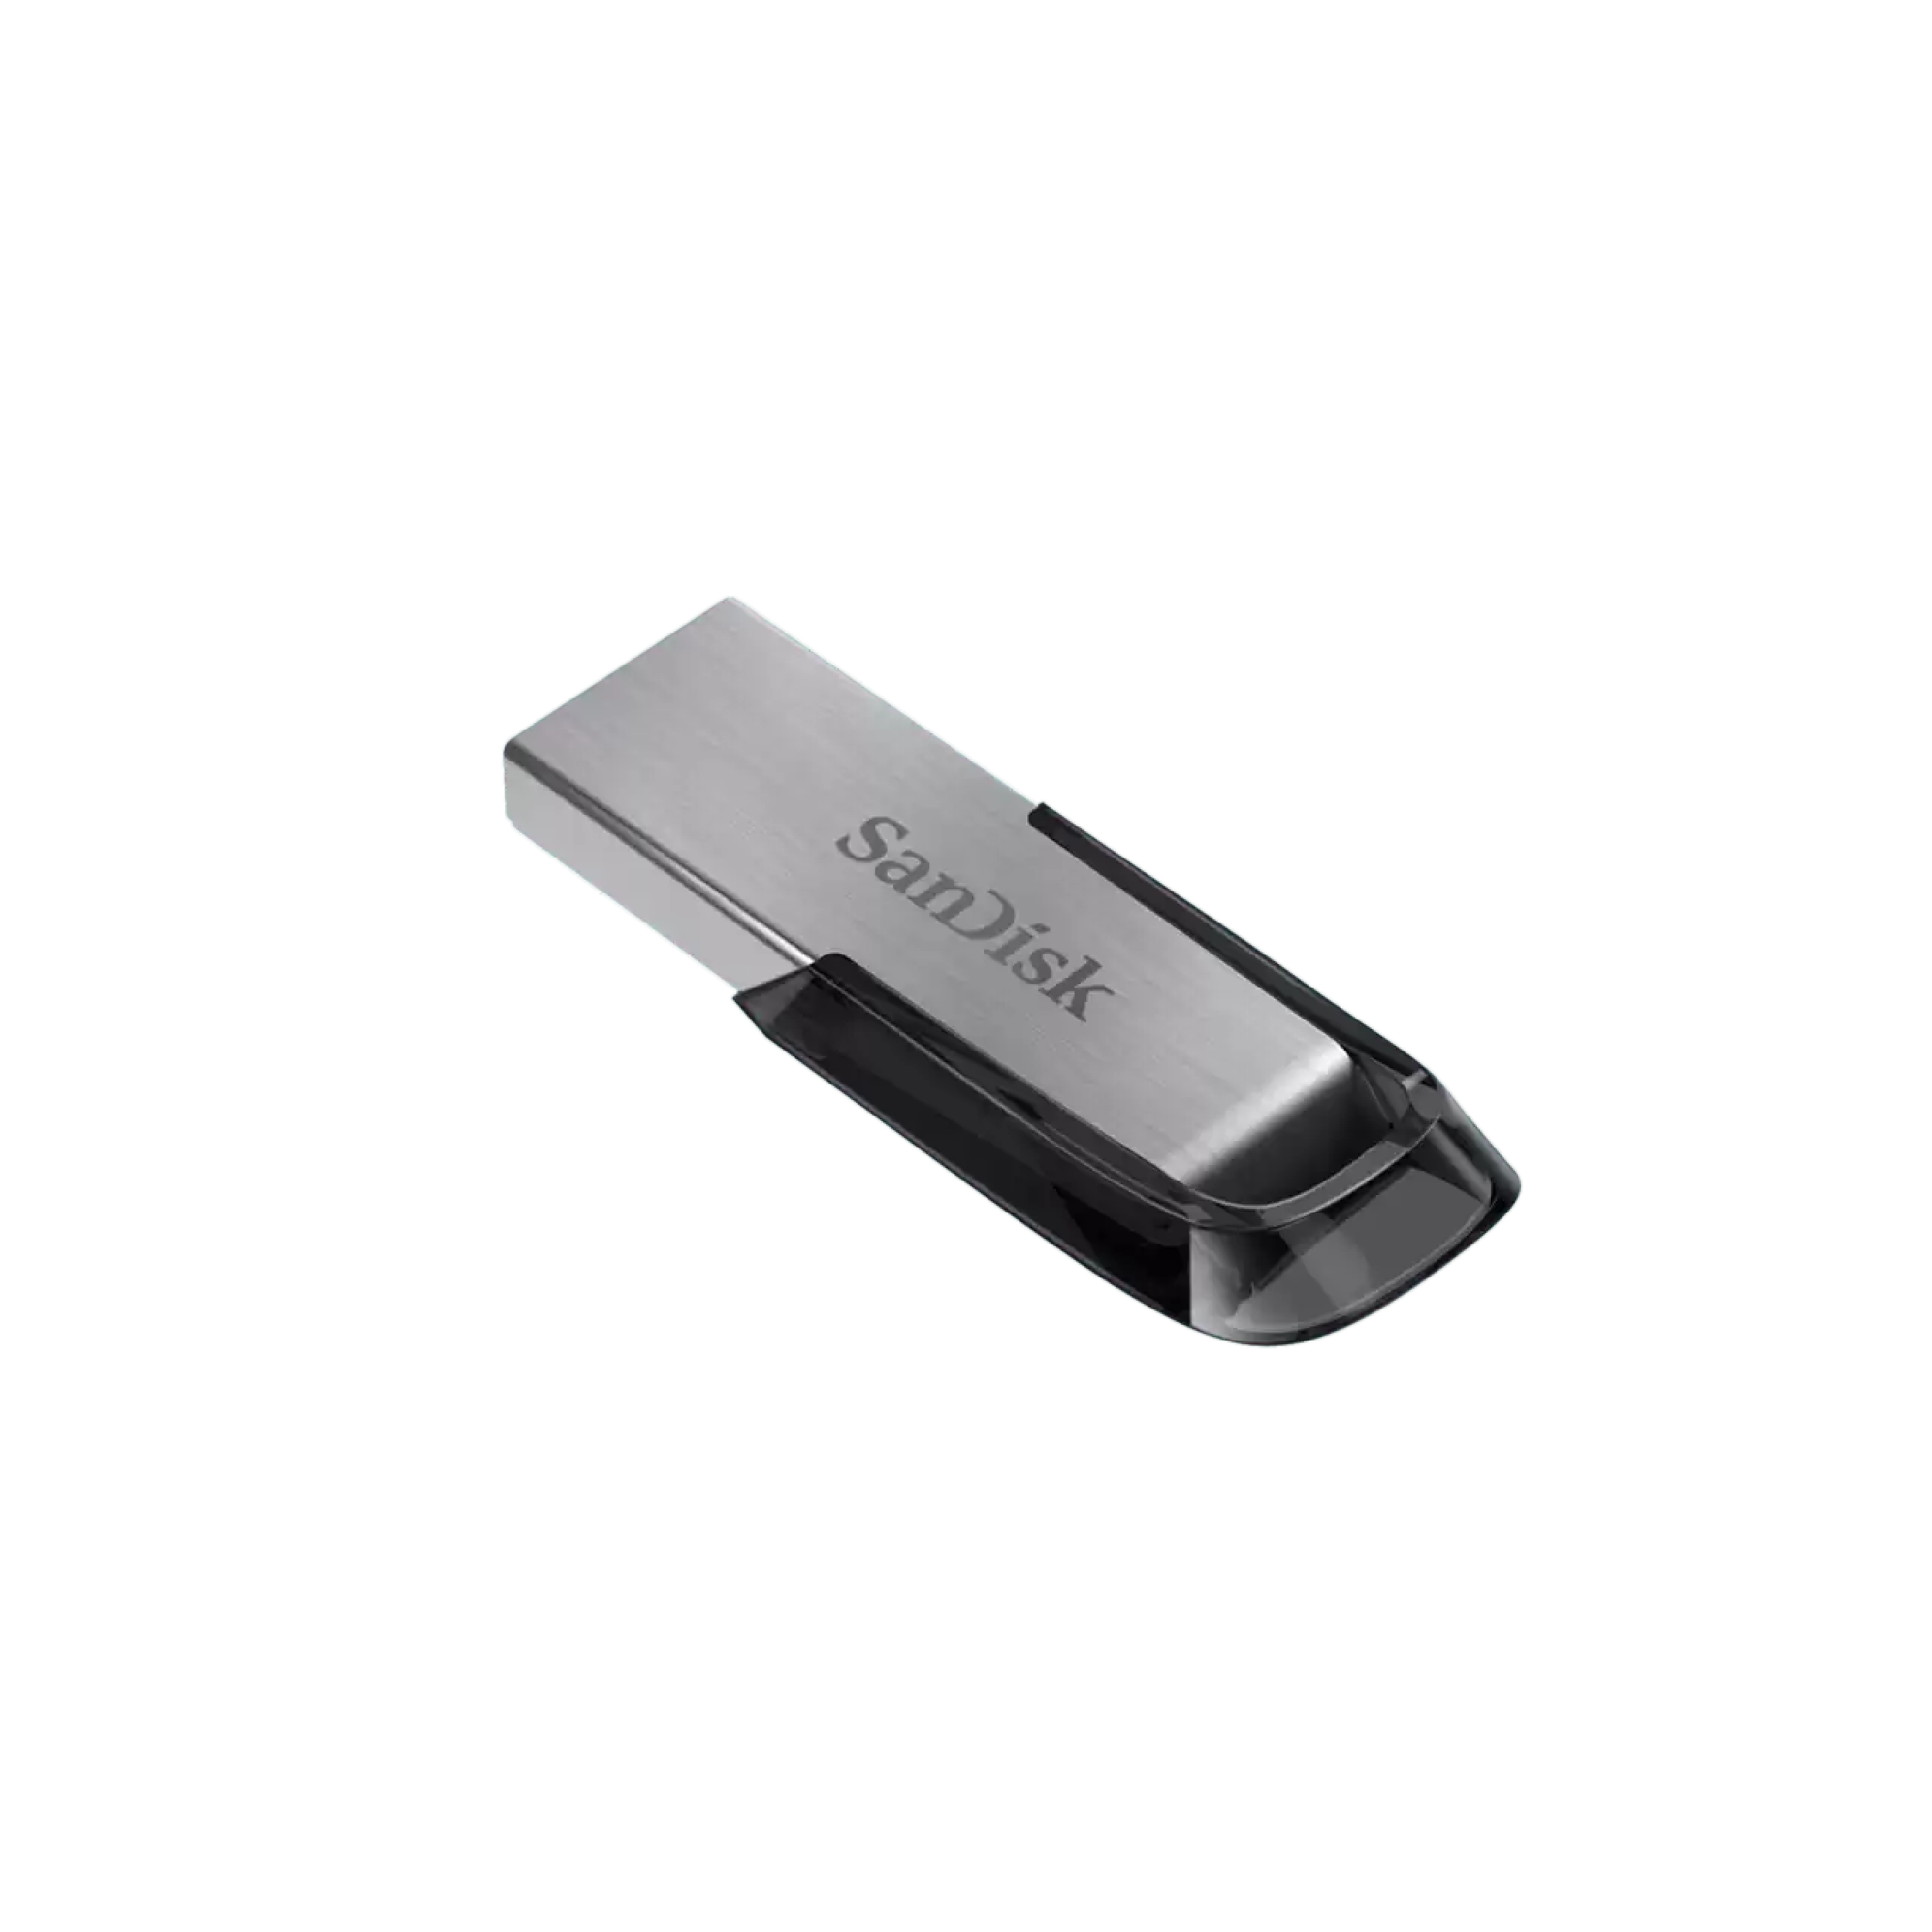 SanDisk Ultra Flair, 256GB, USB 3.0, USB Flash Drive (SDCZ73-256G-A46)